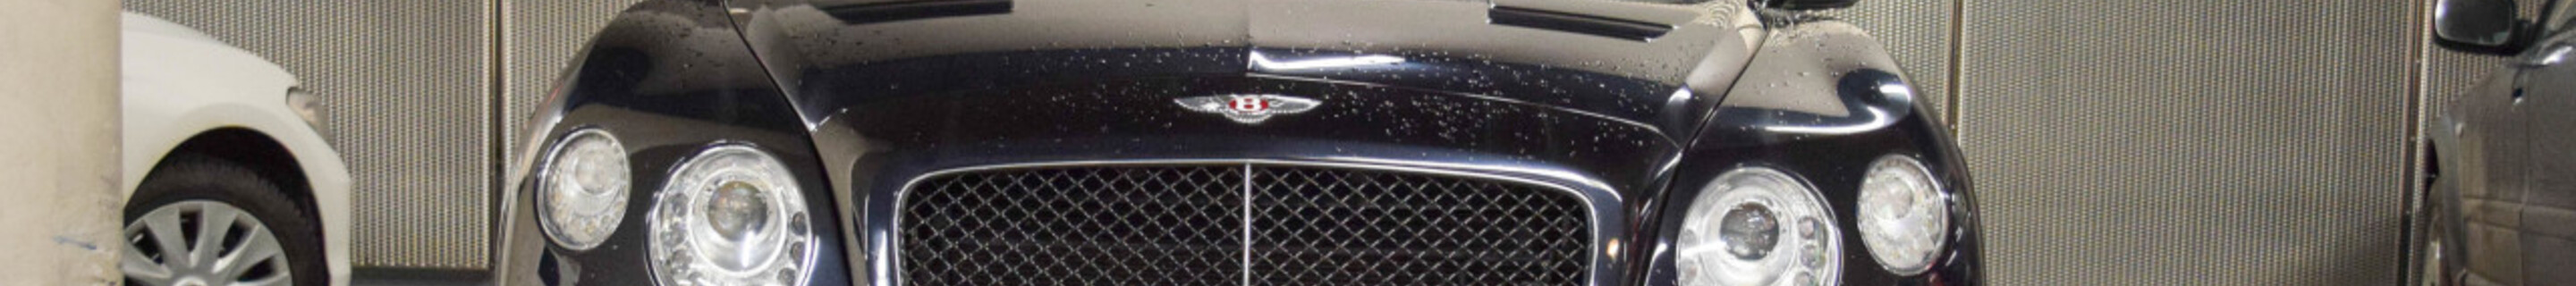 Bentley Mansory Continental GT V8